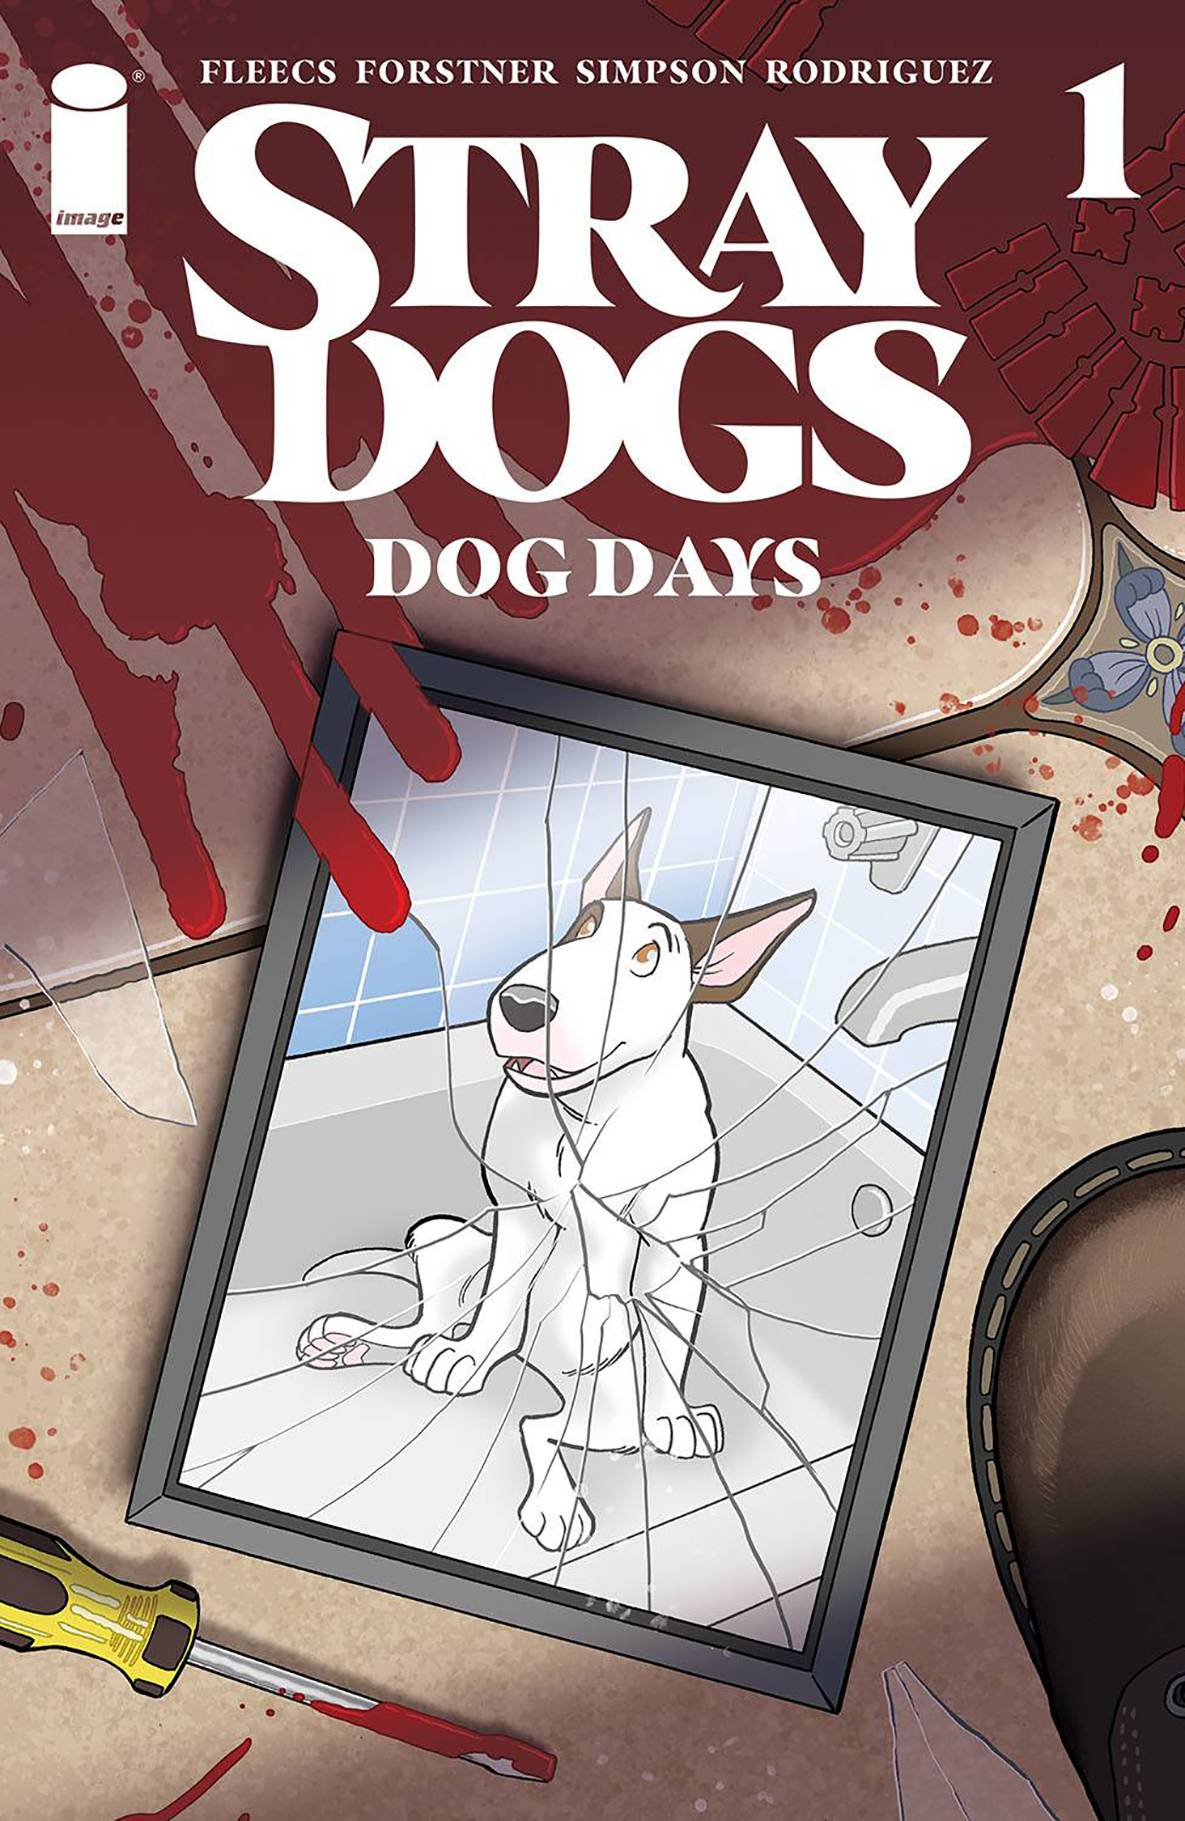 DF STRAY DOGS DOG DAYS #1 CVR A FLEECS SGN